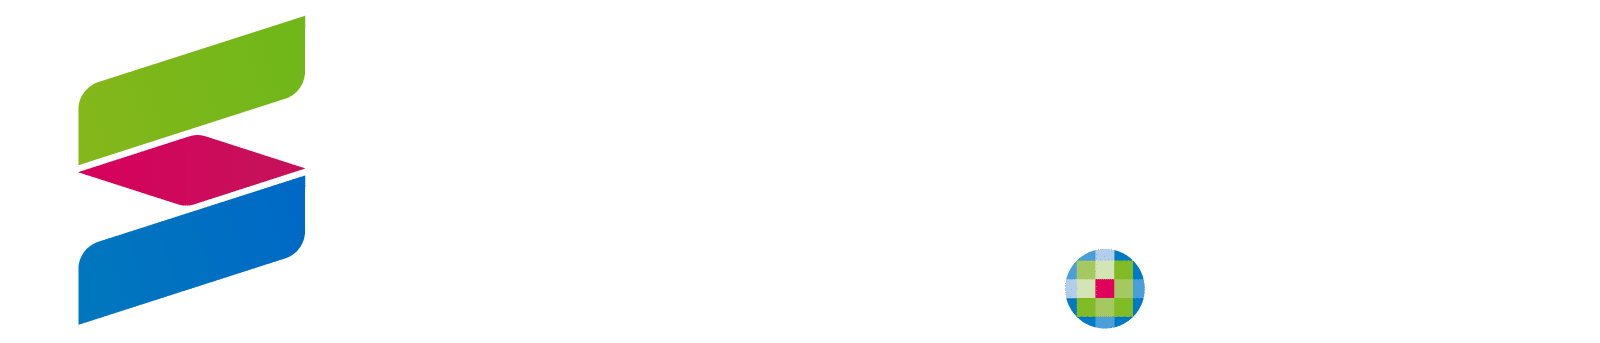 Logo-Softwariza3-Premium-Hybrid-HD